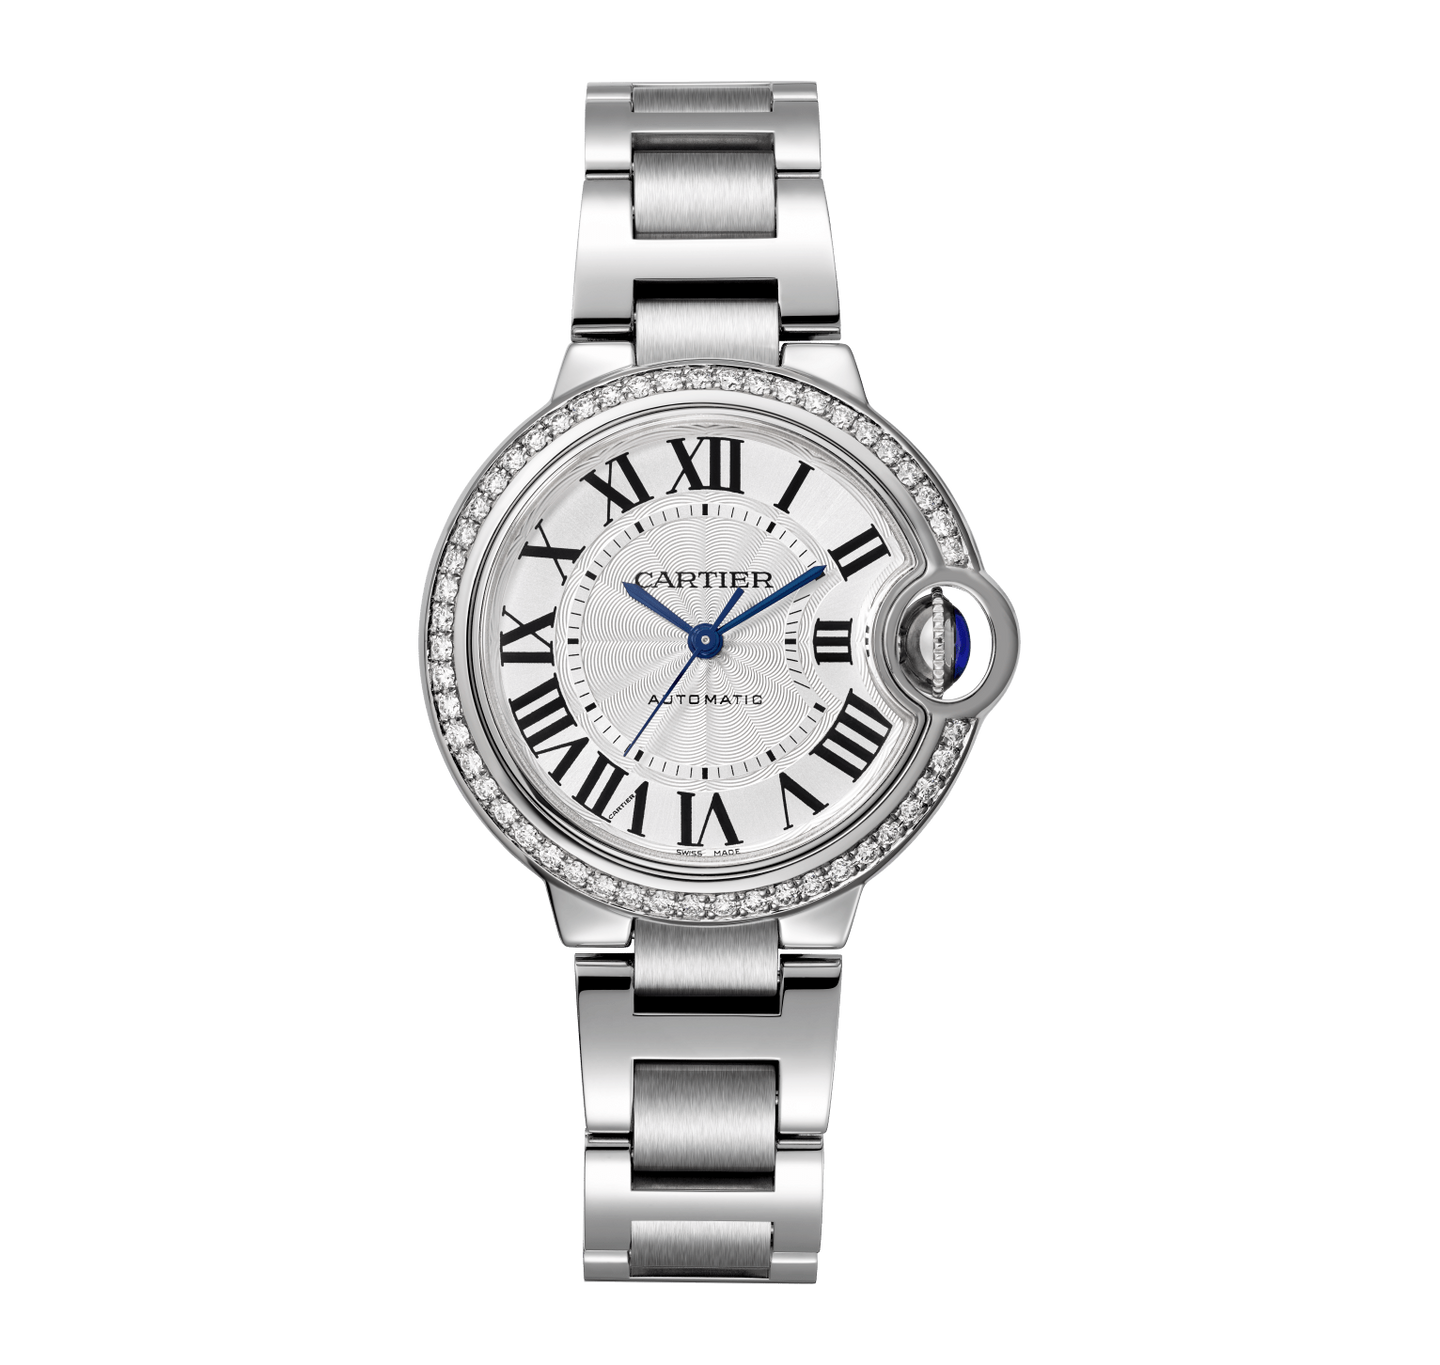 Ballon Bleu De Cartier Watch with Diamonds